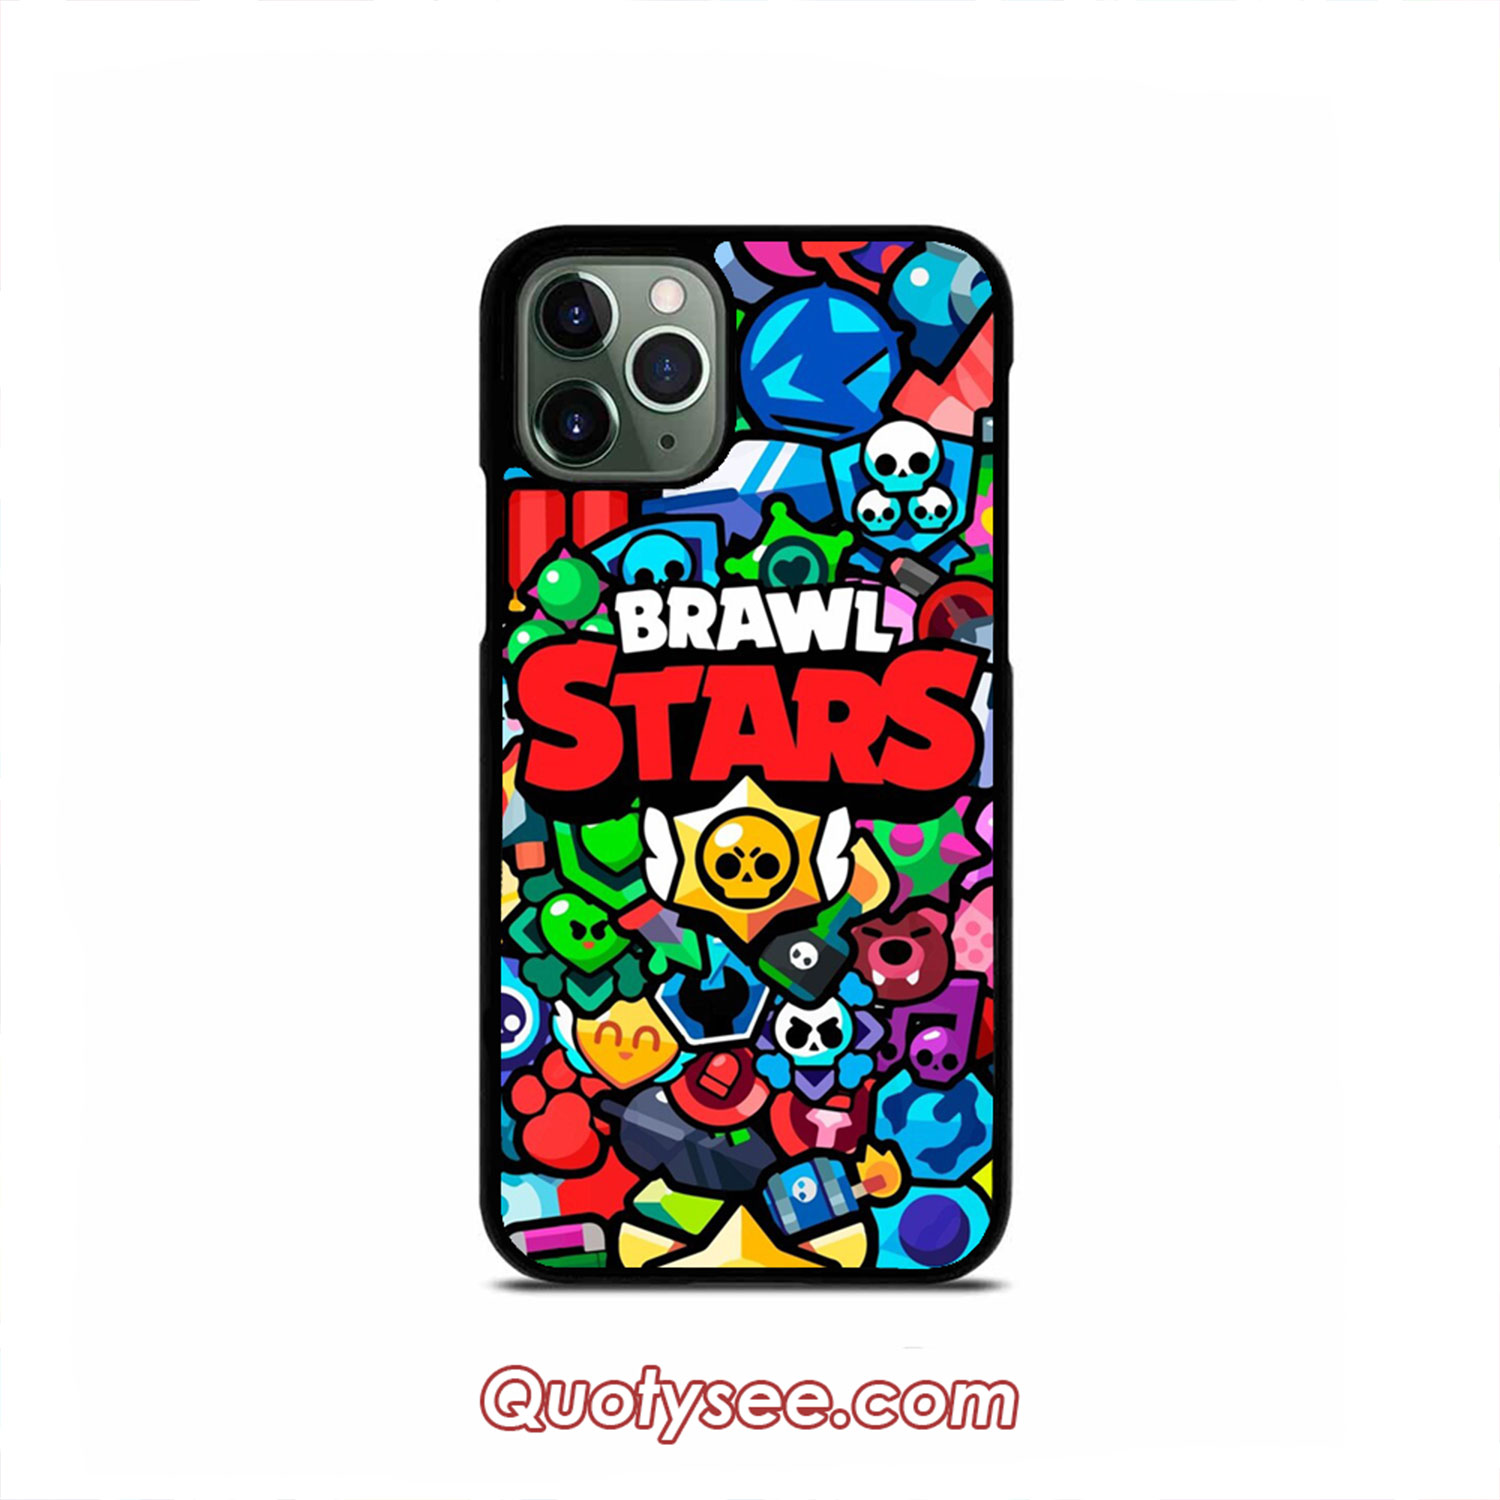 Brawl Stars Iphone Case 11 11 Pro 11 Pro Max Xs Max Xr X 8 8 Plus 7 7 Plus 6 6s Quotysee Com - brawl stars profile tracker